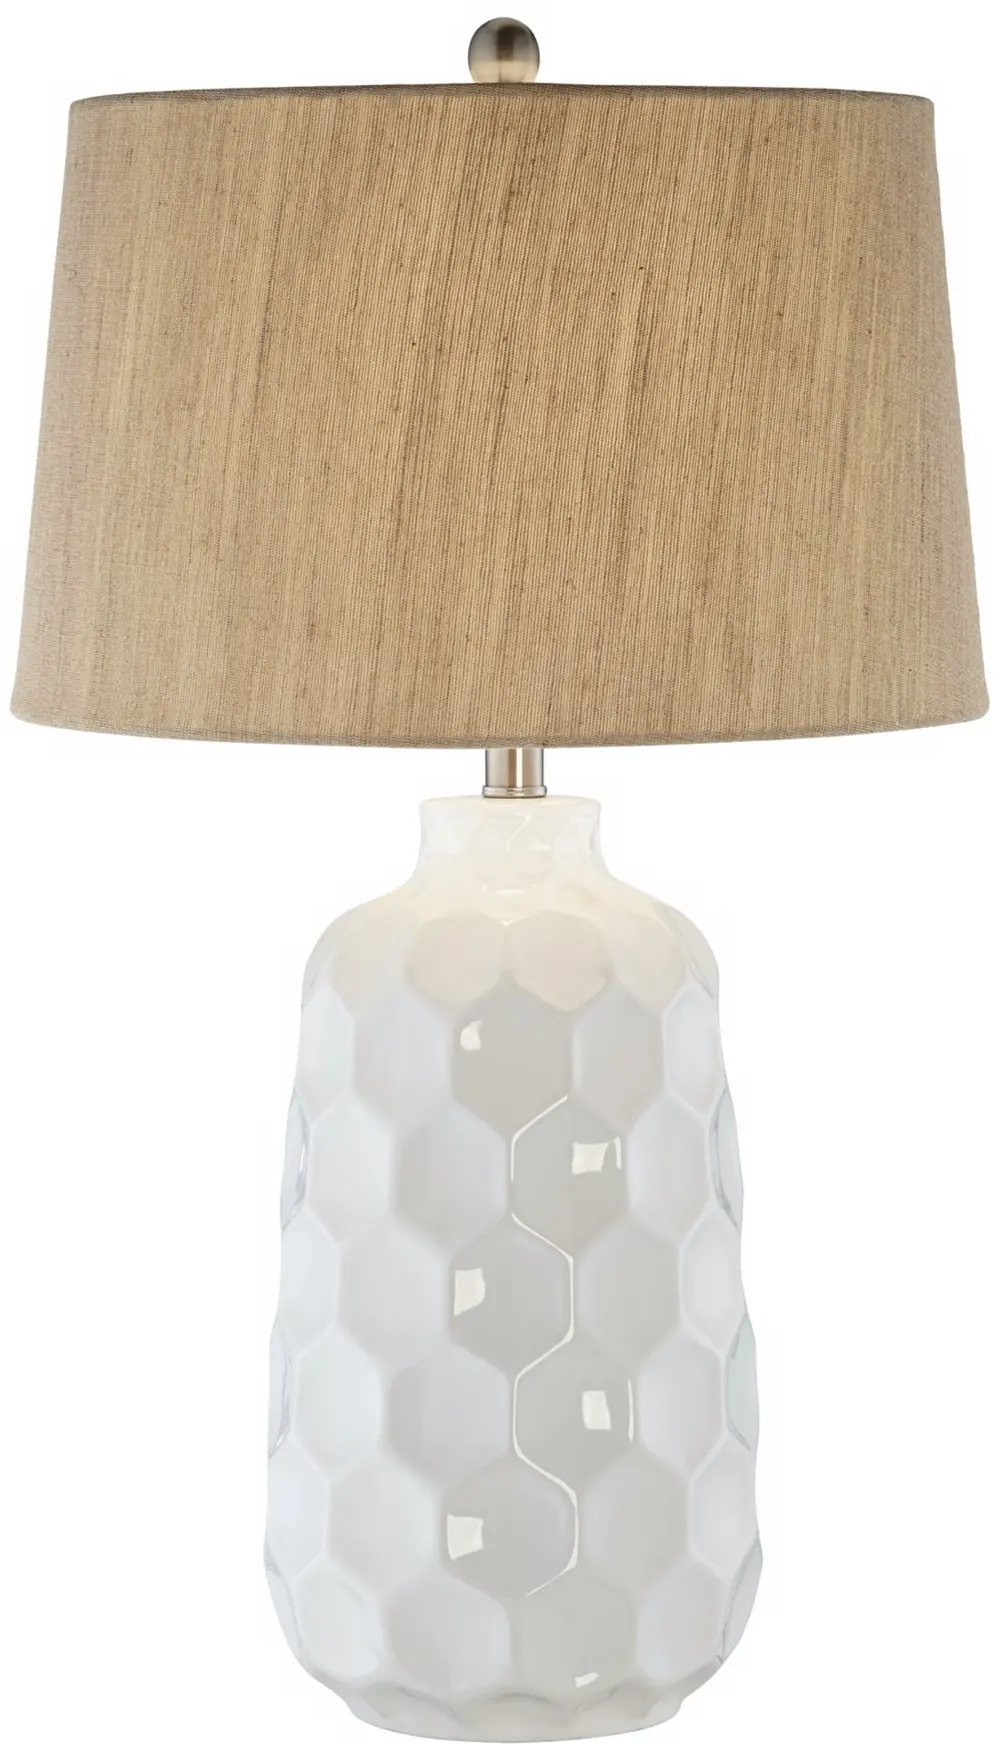 Glossy White Ceramic Honeycomb Table Lamp - Dreams-1